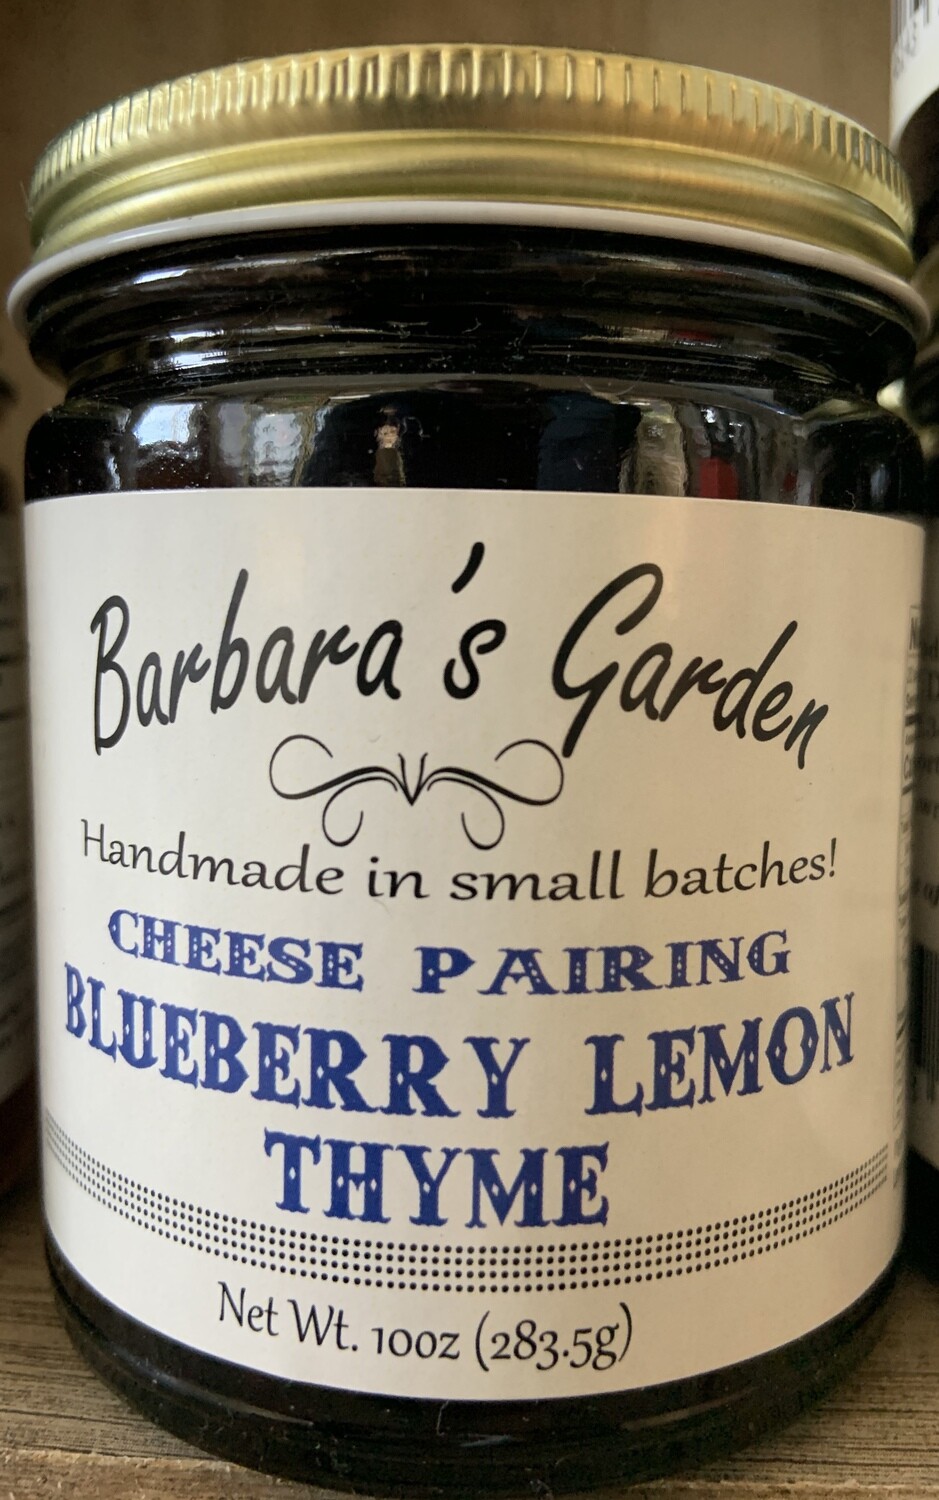 Barbara's Garden Cheese Pairing" Blueberry Lemon Thyme 10 oz